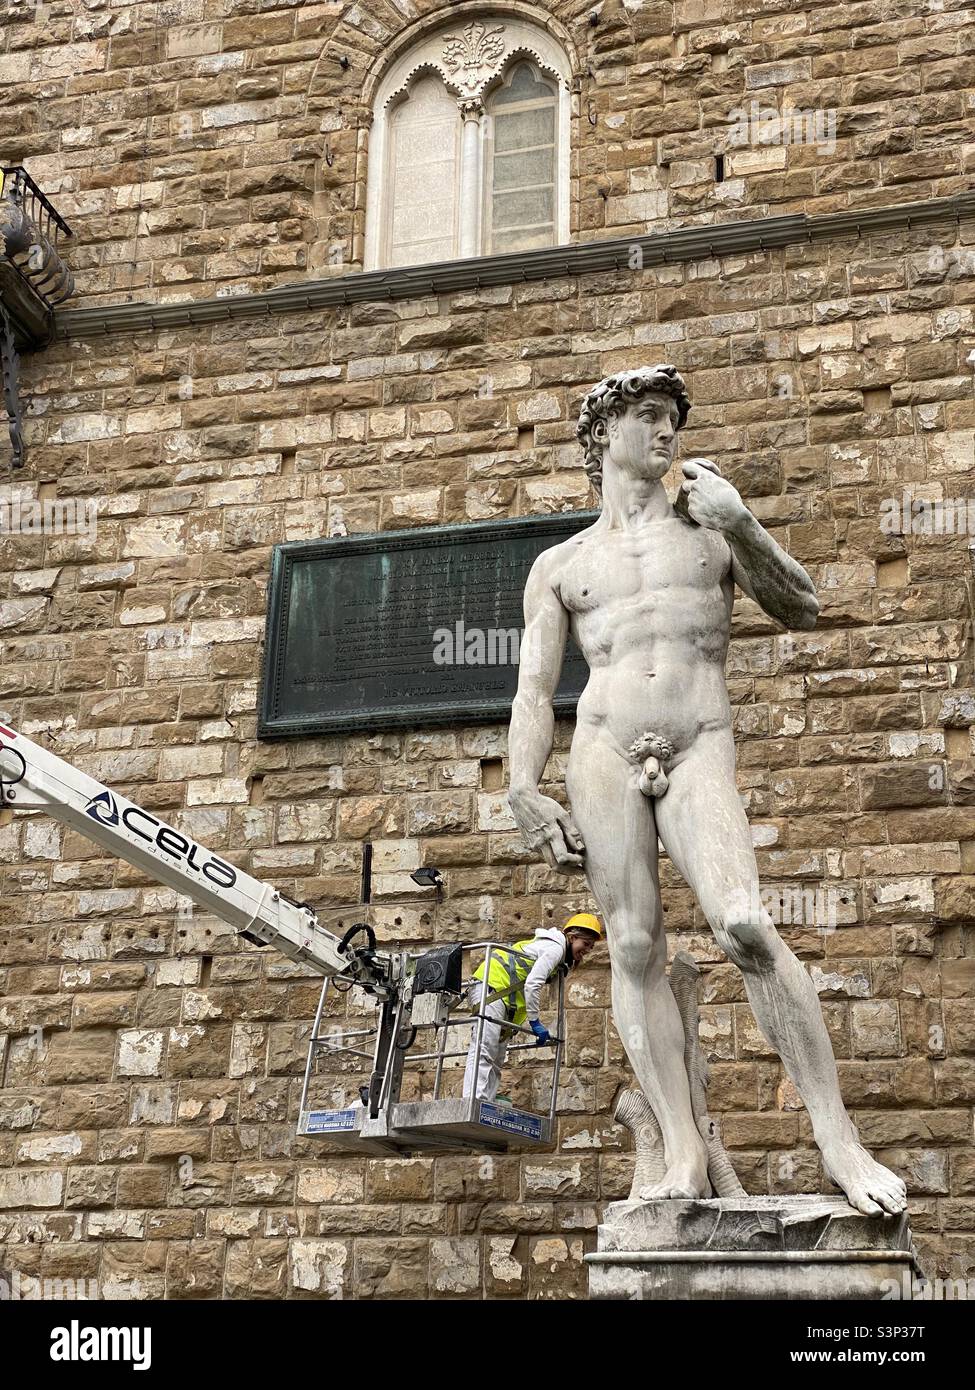 David Michelangelo piazza fella Signoria Palazzo Vecchio. Travailleur dans un nettoyeur de grue Banque D'Images